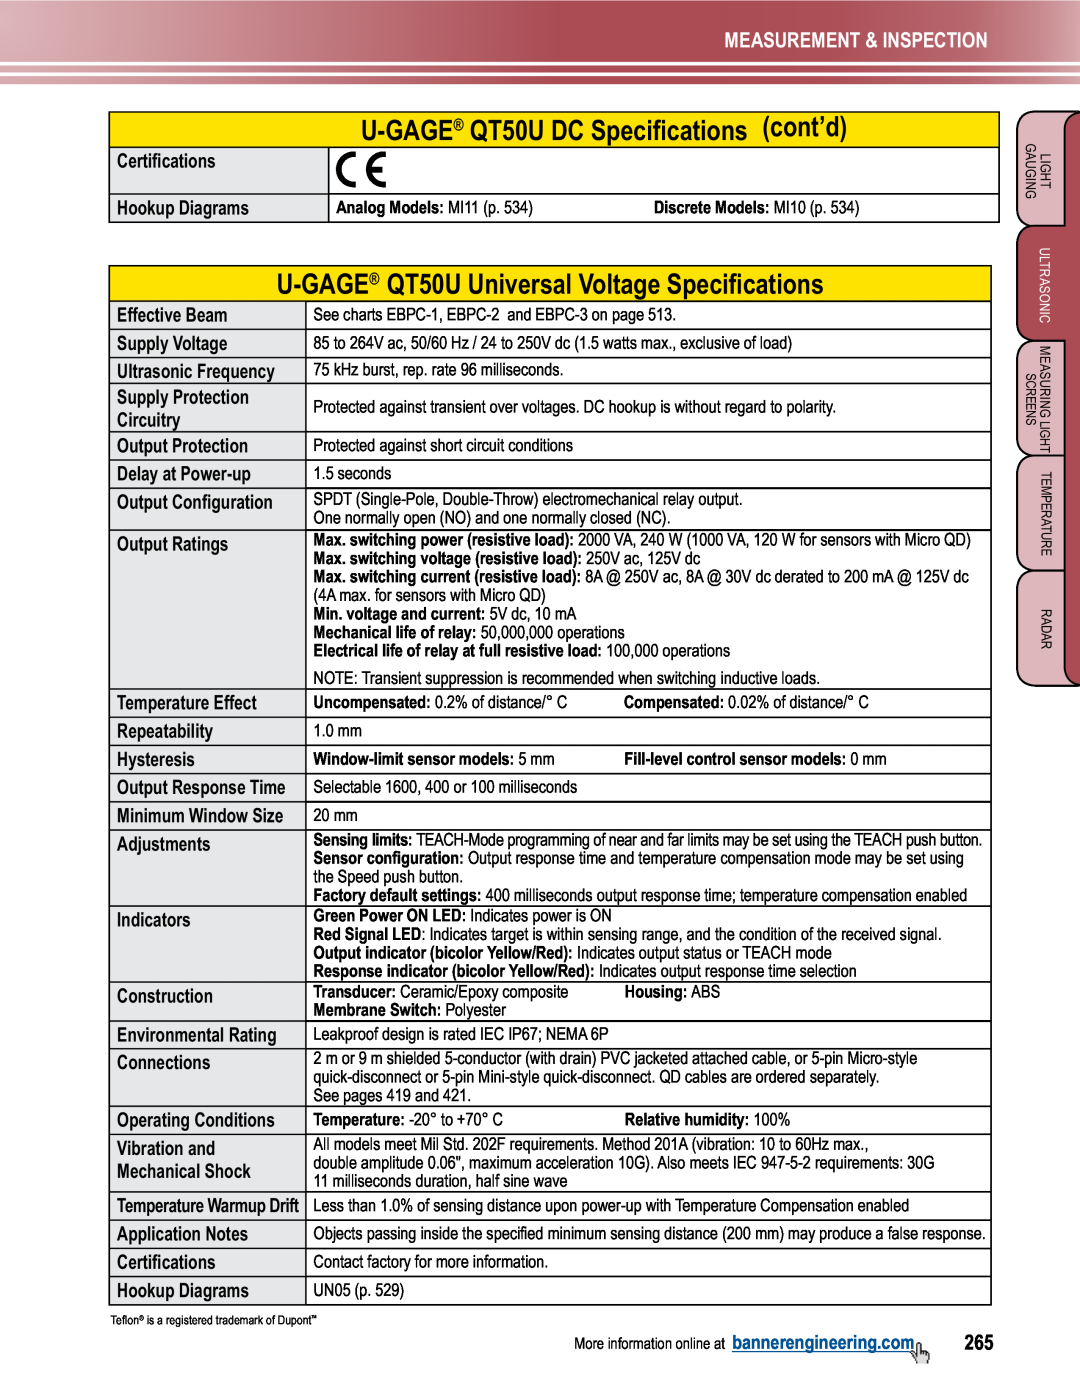 Banner L-GAGE manual U-GAGE QT50U DC Specifications cont’d, U-GAGE QT50U Universal Voltage Specifications 